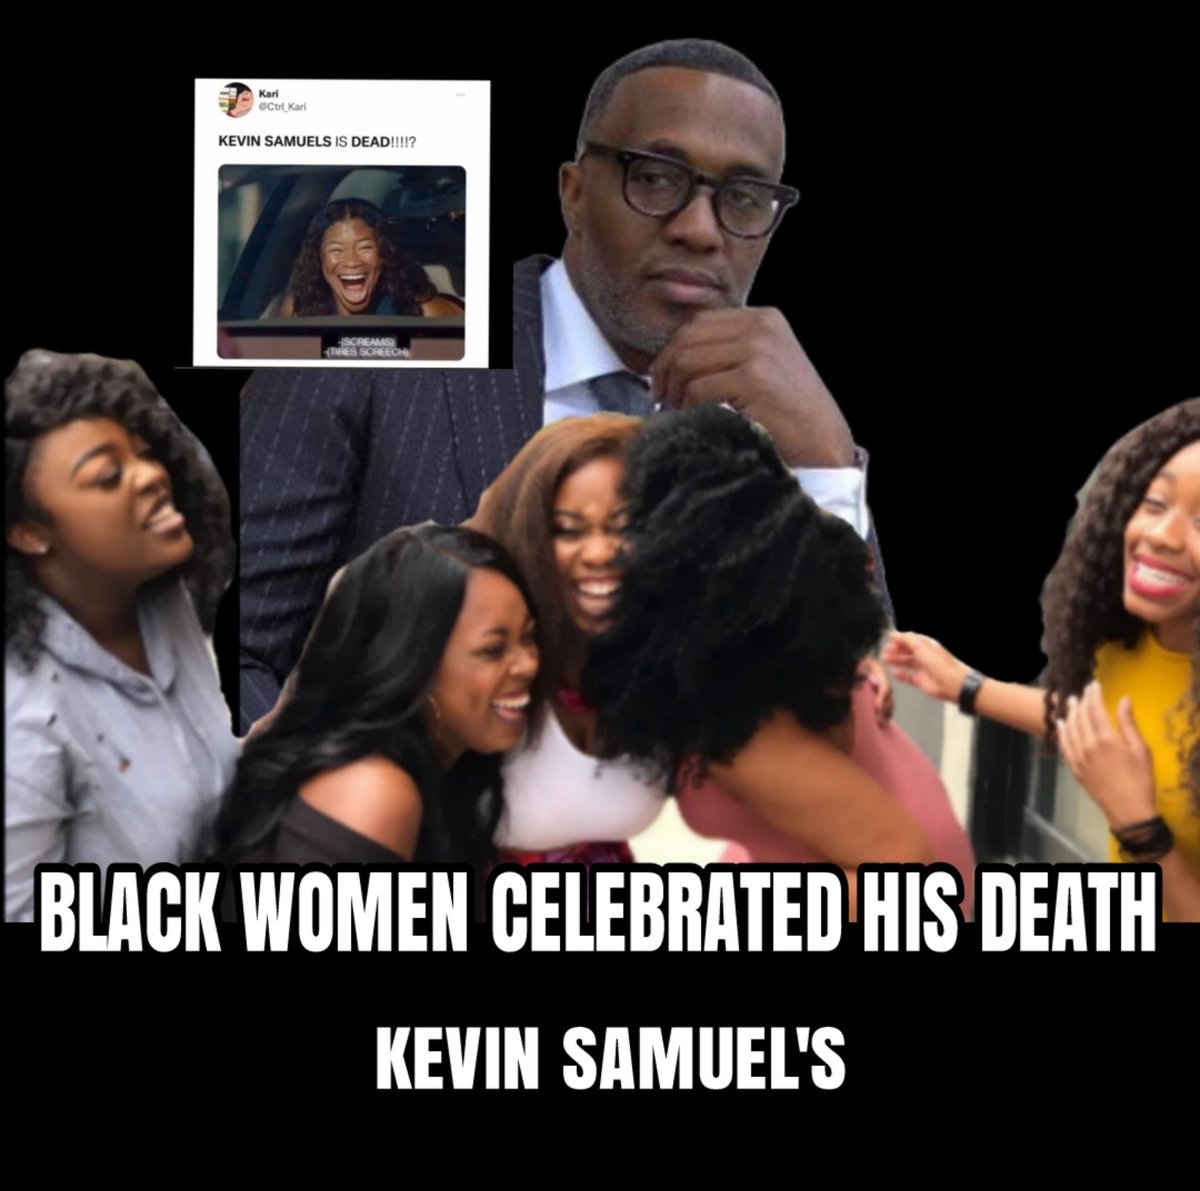 #blackman #blackmen #KevinSamuels #men #blackwomen #blackwoman #BlackLivesMatter #BLM #BlackGirlMagic #BlackGirlsRock #BlackAmericans #BlackAmerica #Blackculture #Blackcommunity #BlackExcellence #theshaderoom #protectblackmen 
All I need to know about BW.